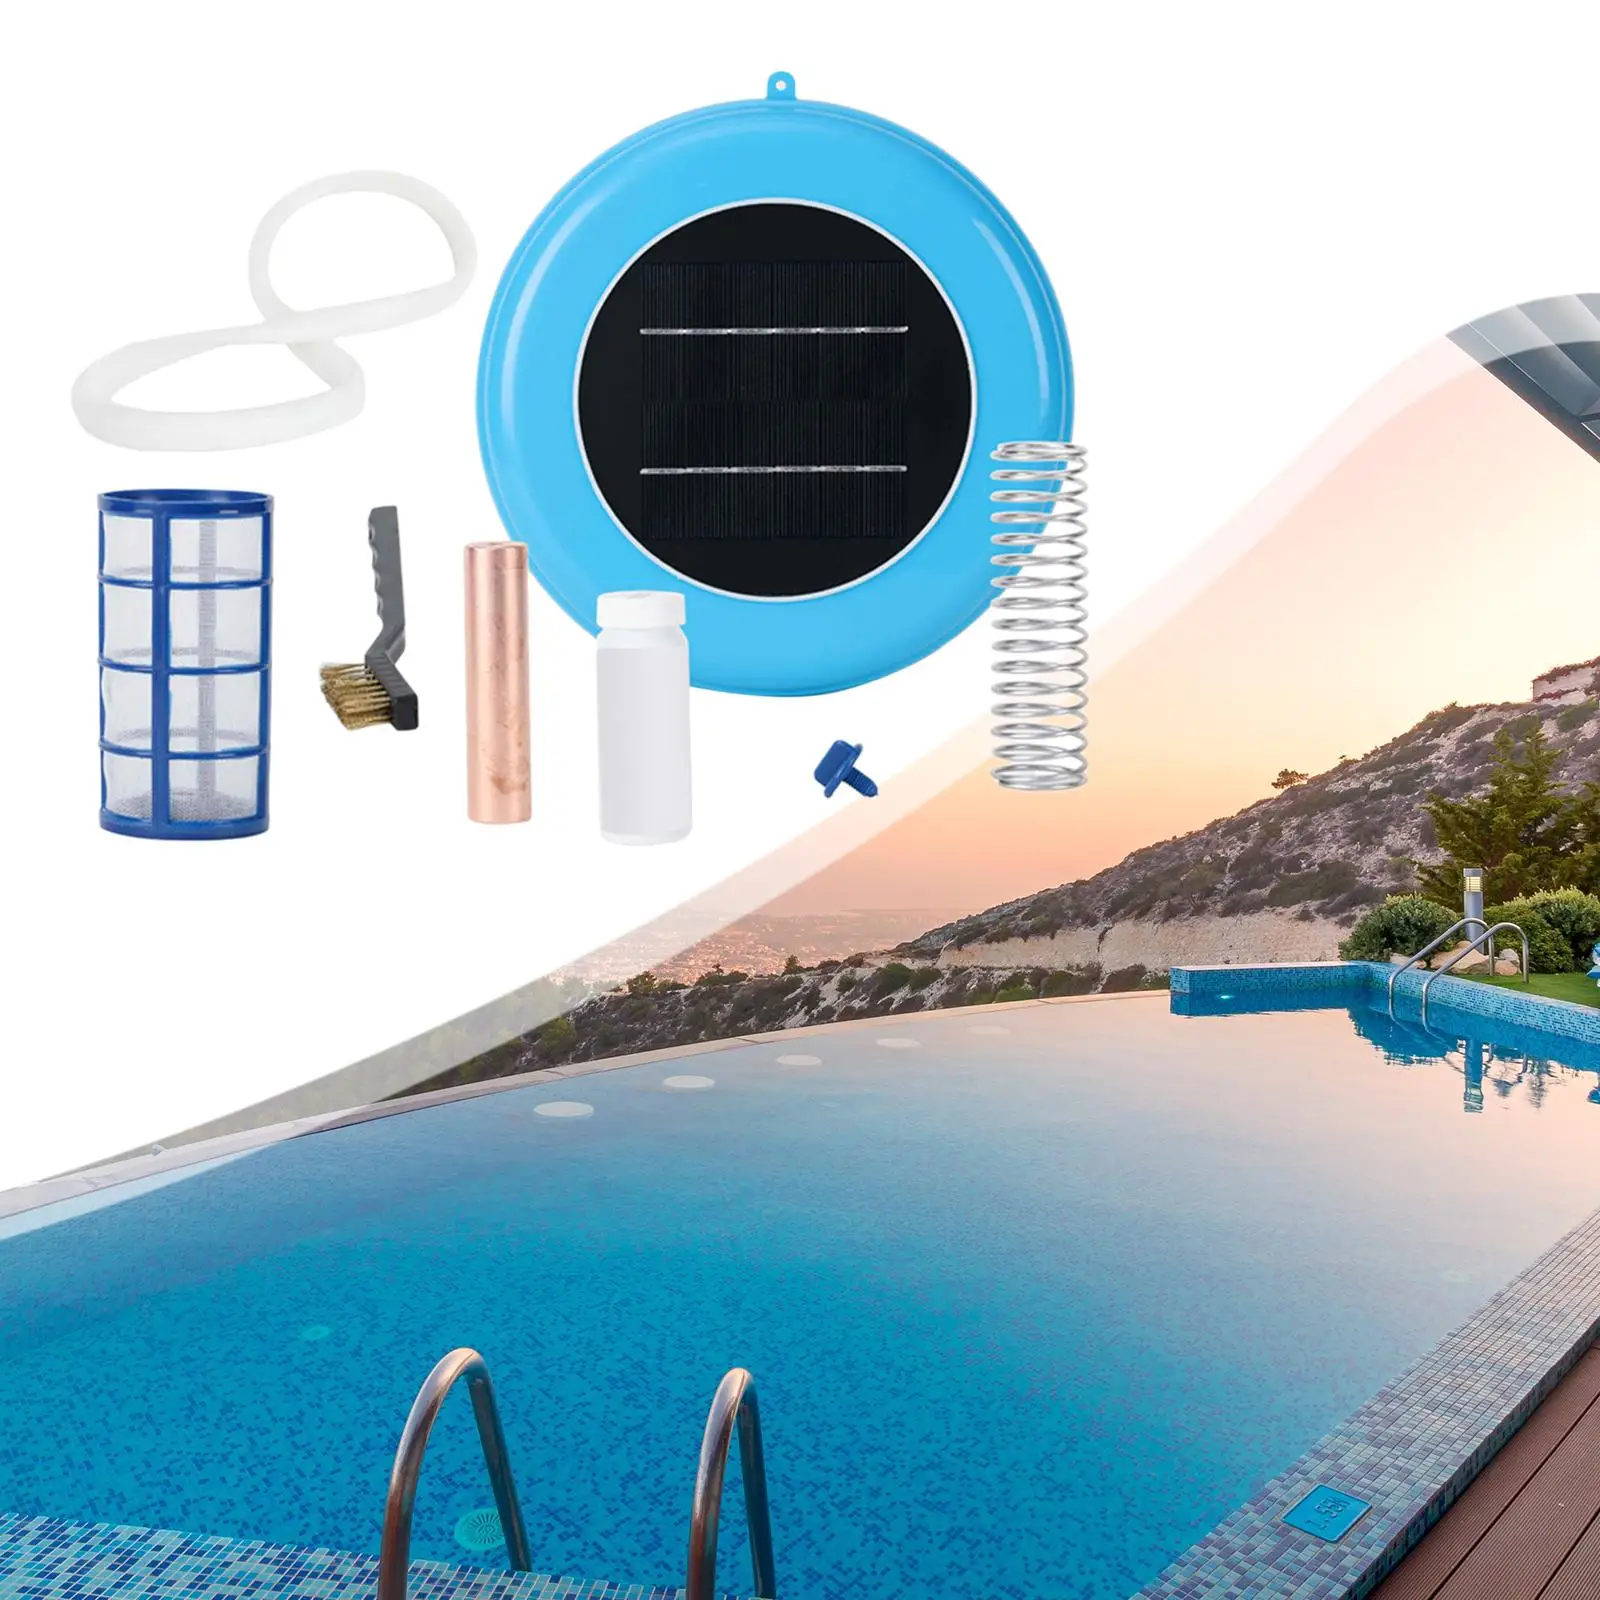 Solar Pool Ionizer Pool Clean Tool Kill Algae Keeps Pool Cleaner Water Processor Purifier Pool Cleaner for Garden Outdoor